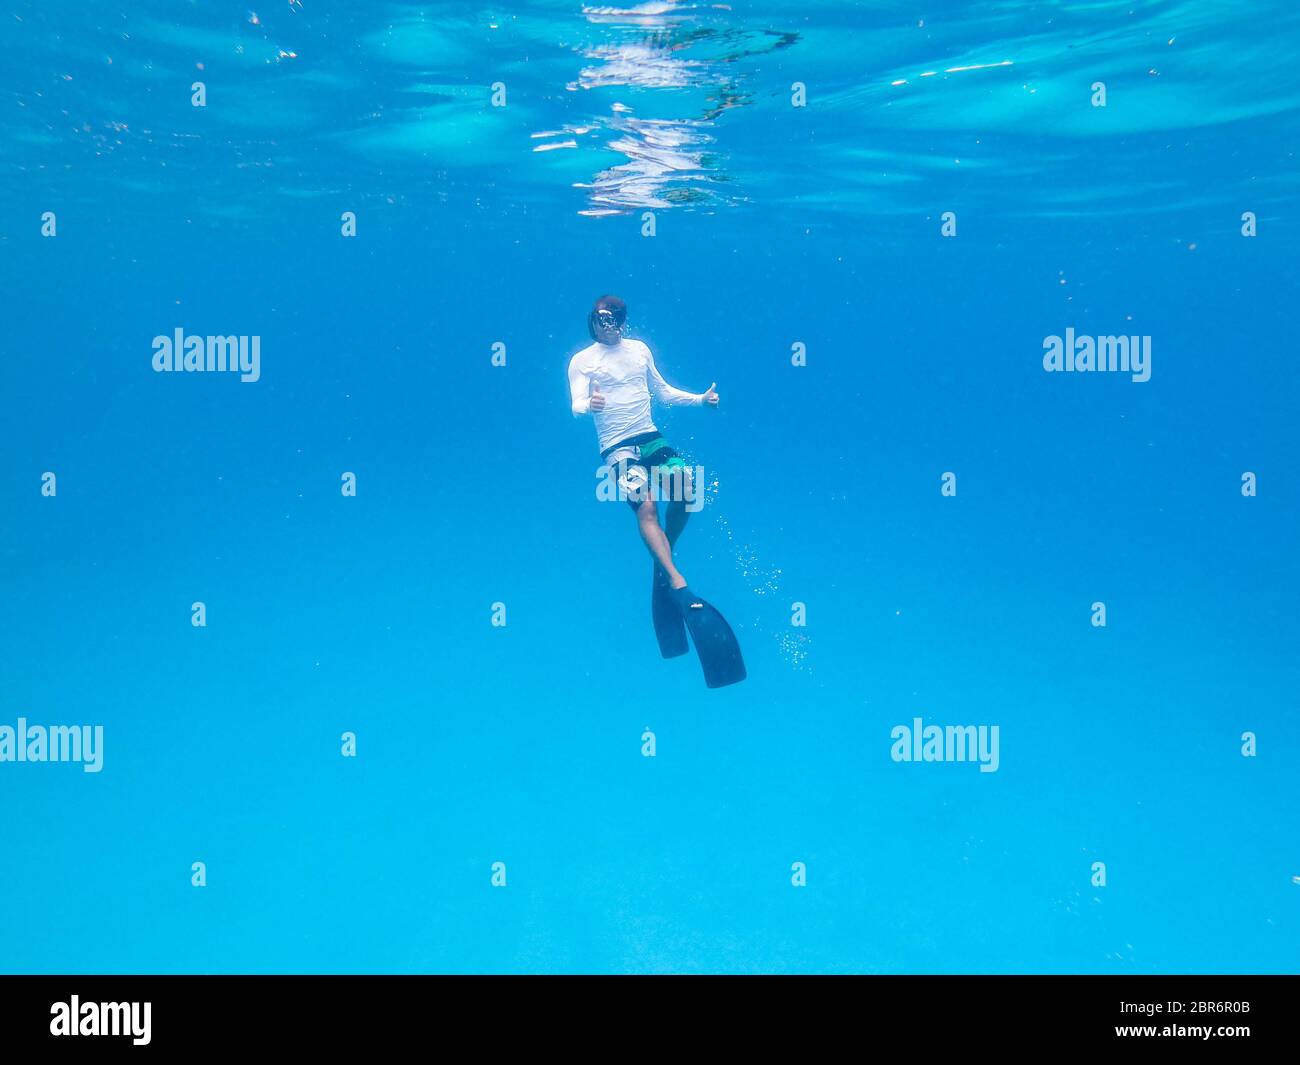 Underwater view of man free diving in blue ocean. Stock Photo